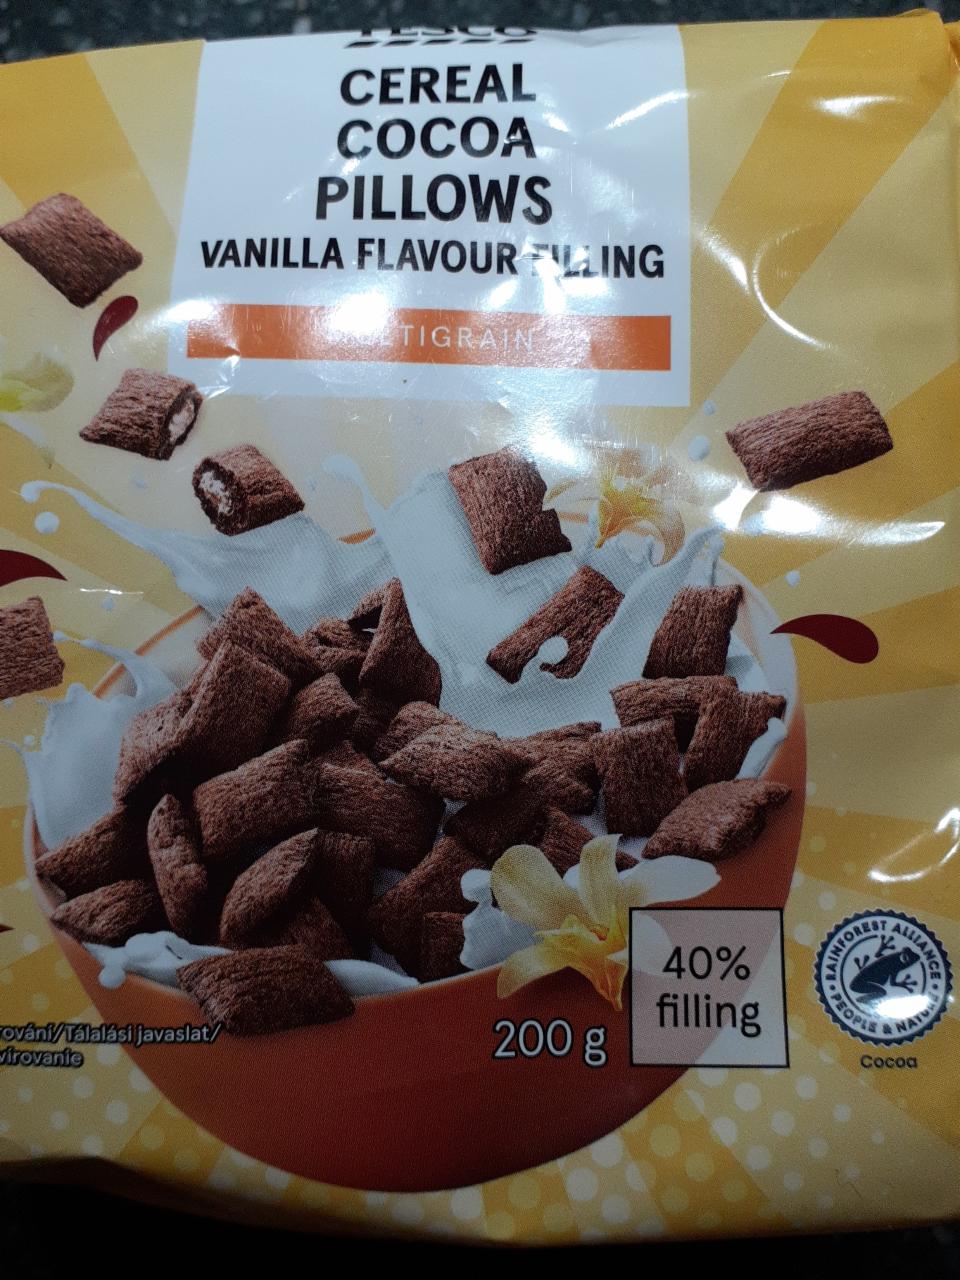 Fotografie - Cereal Cocoa Pillows Vanilla flavour filling Tesco